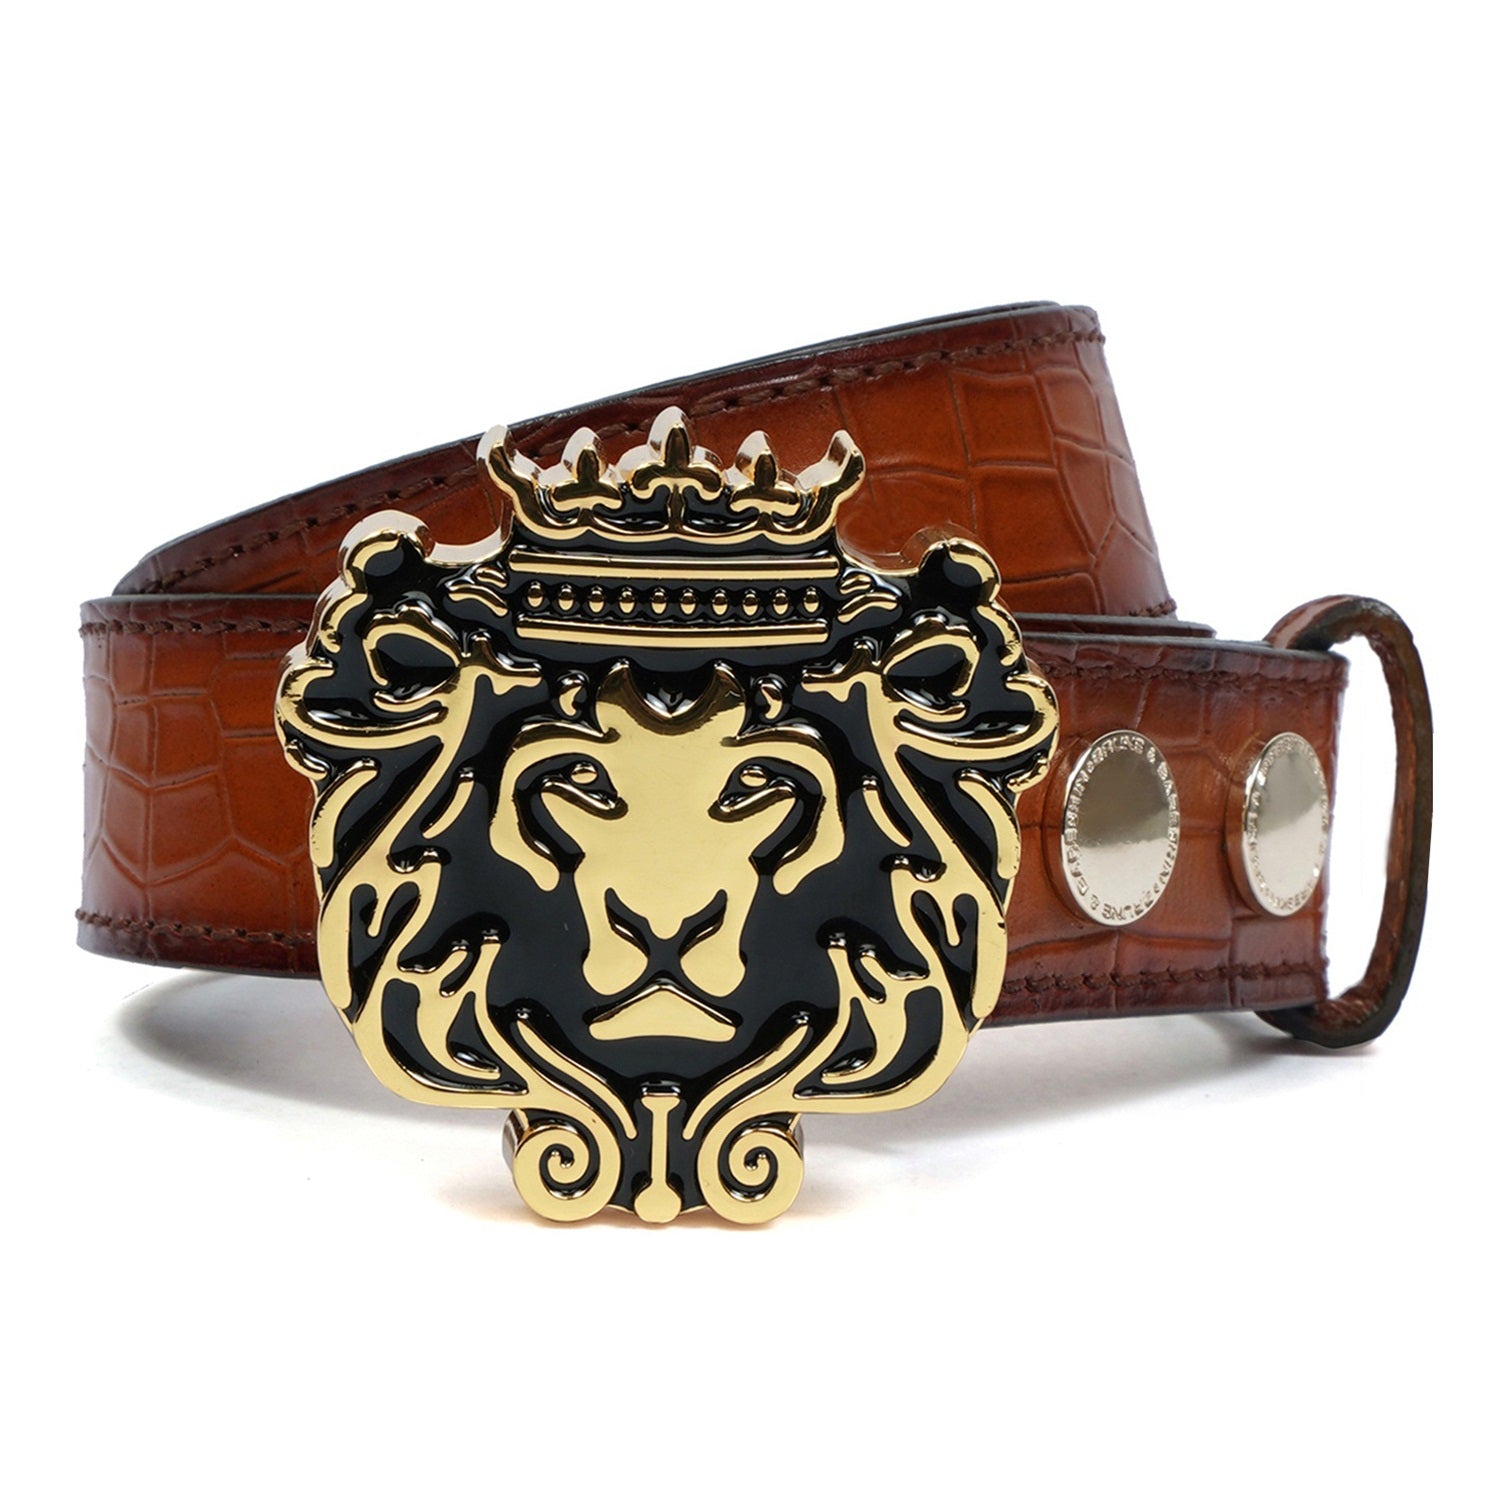 Trademark Lion Logo Buckle Belt in Croco Textured Tan Leather